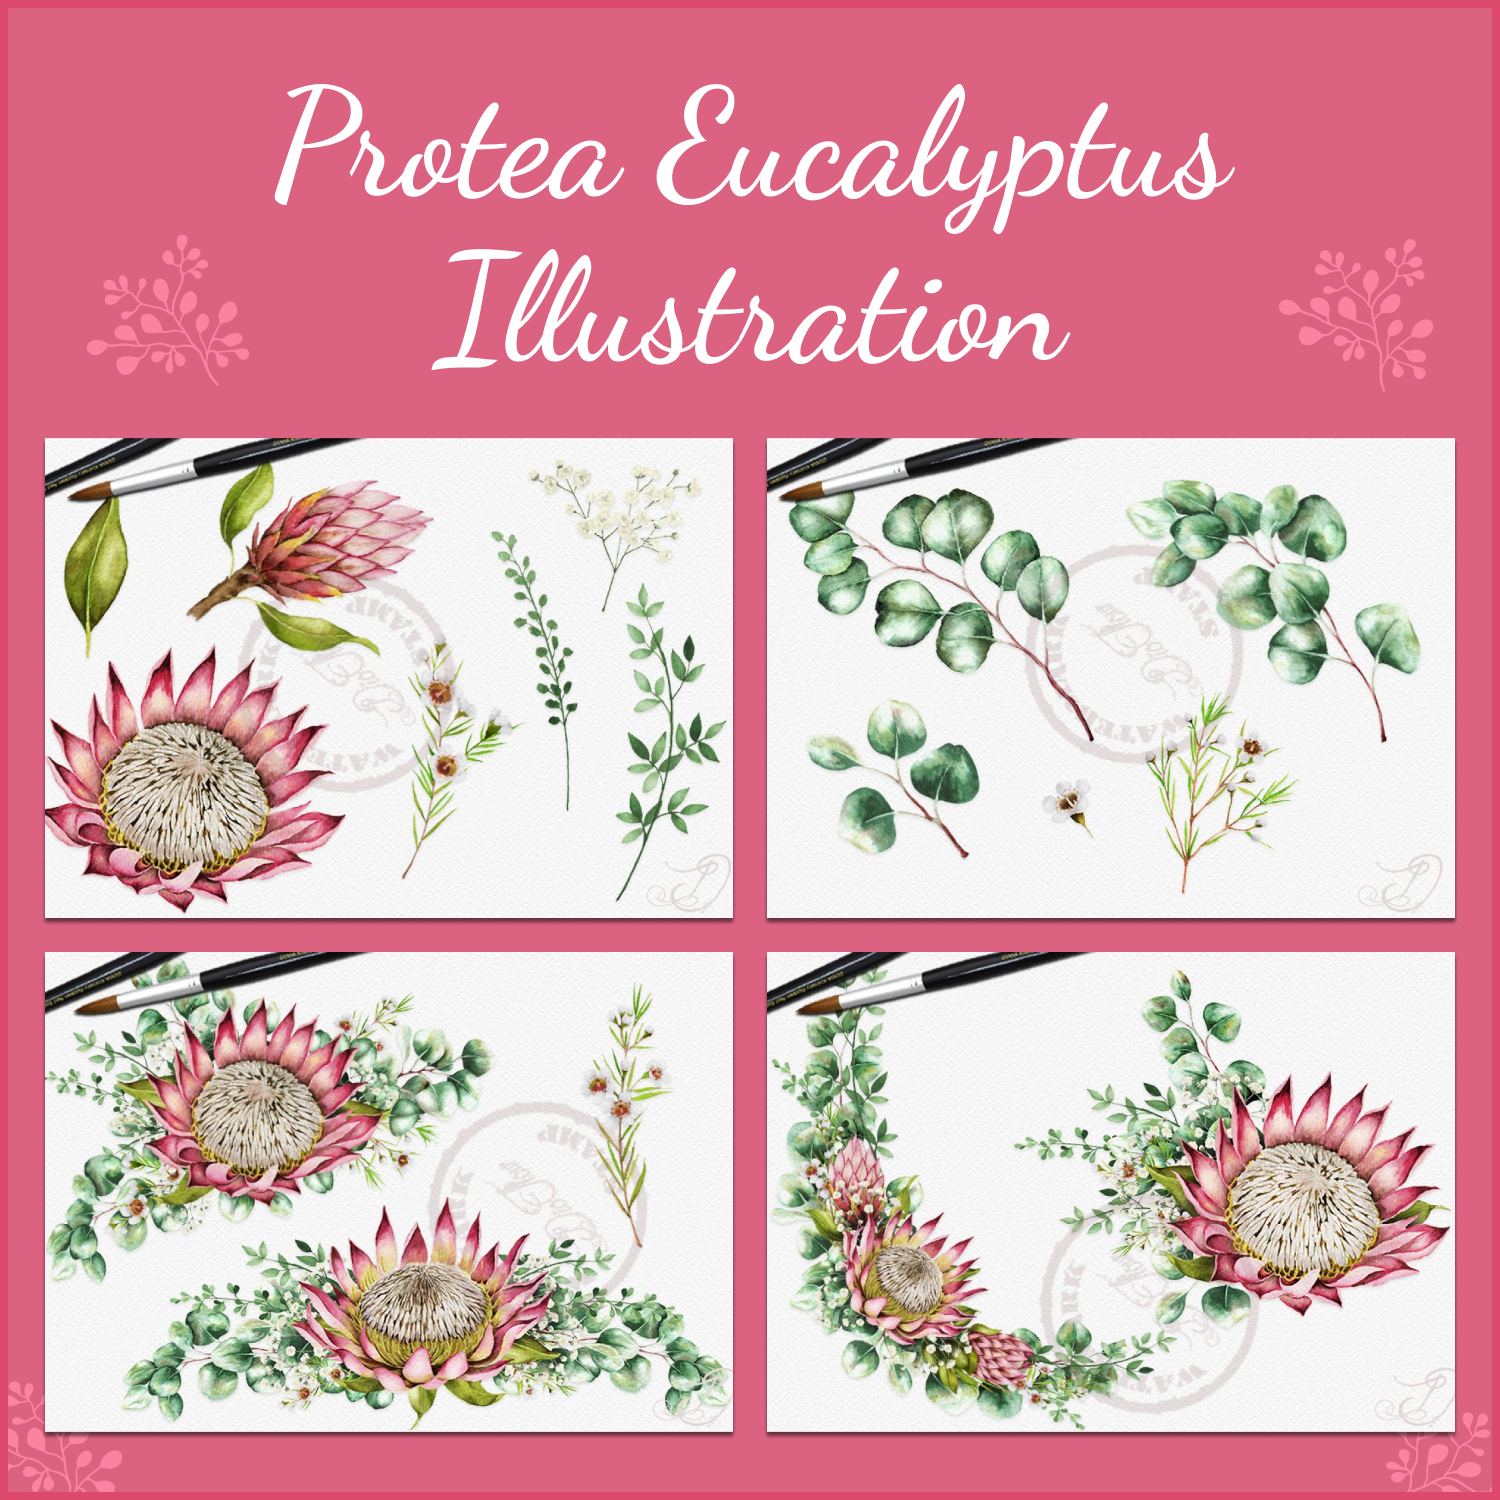 Prints of protea eucalyptus illustration.